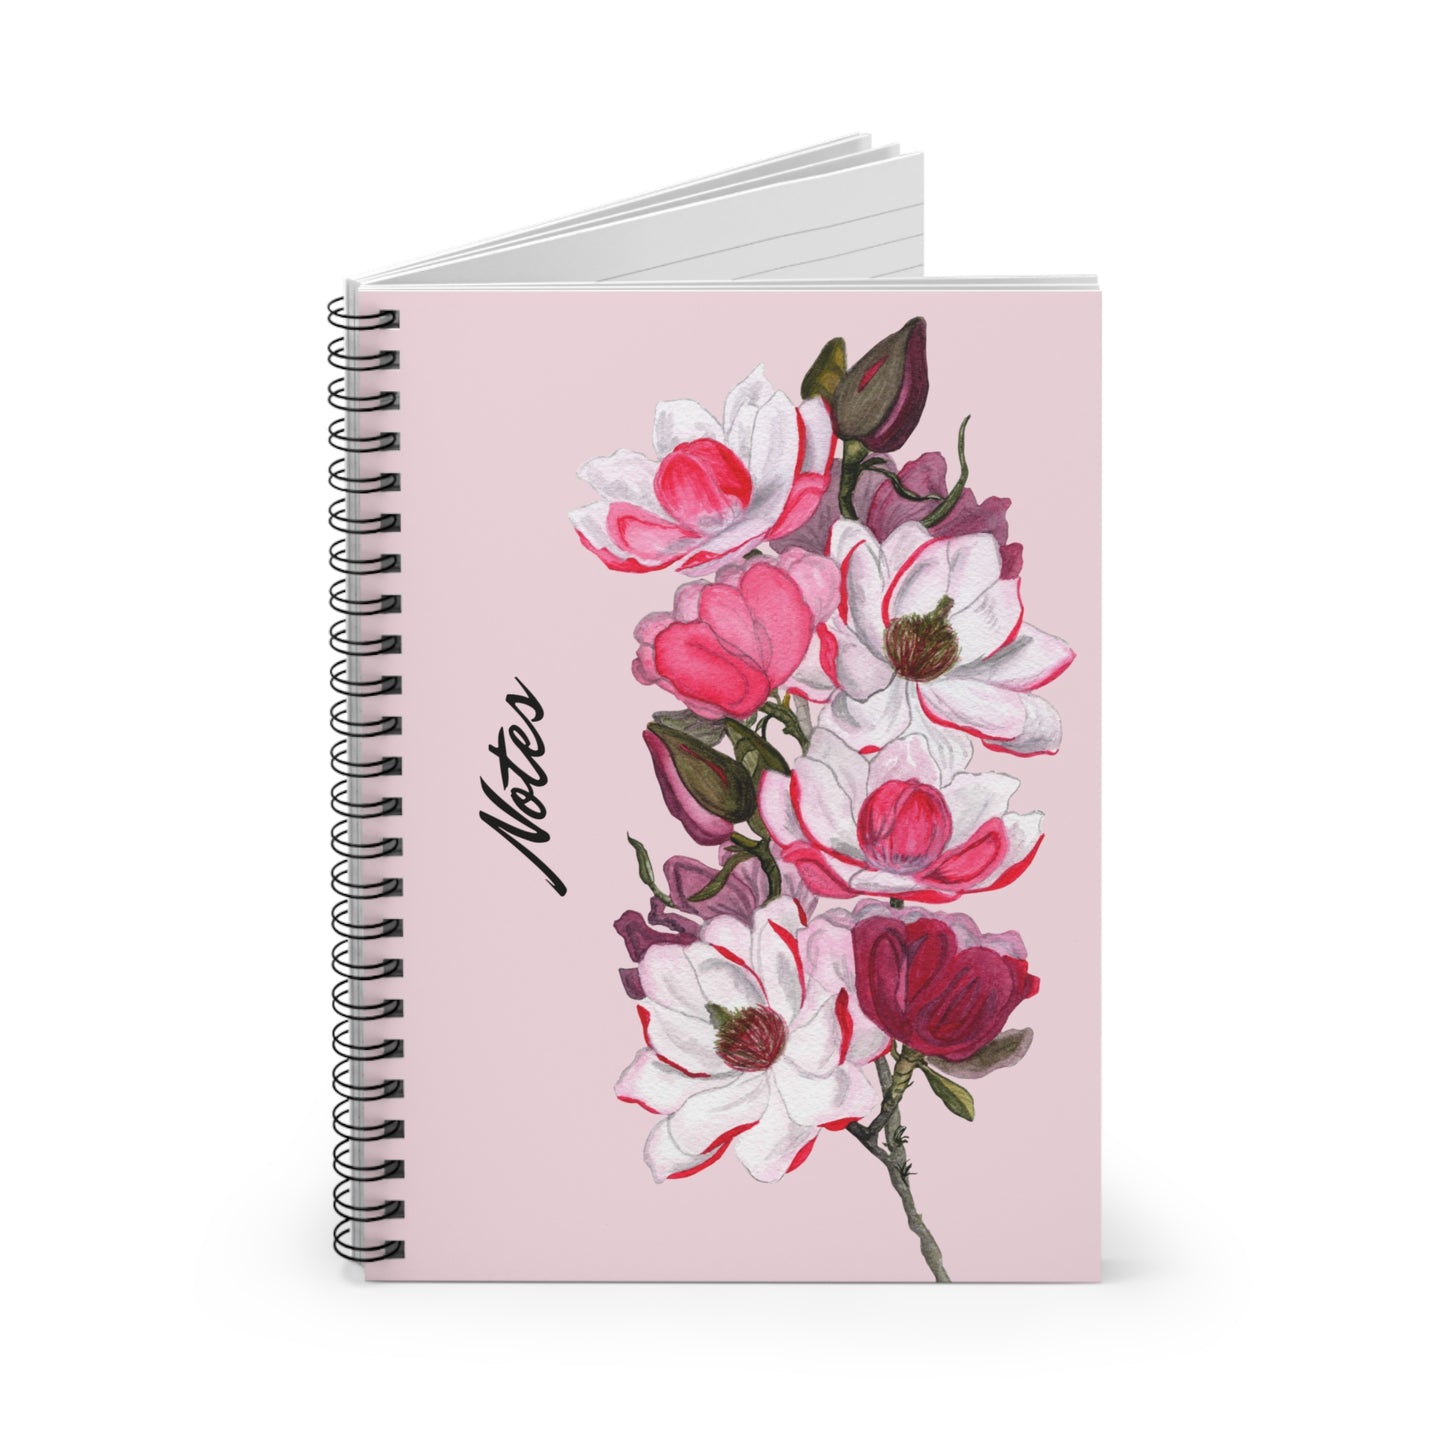 Pink Magnolias Spiral Notebook - Ruled Line